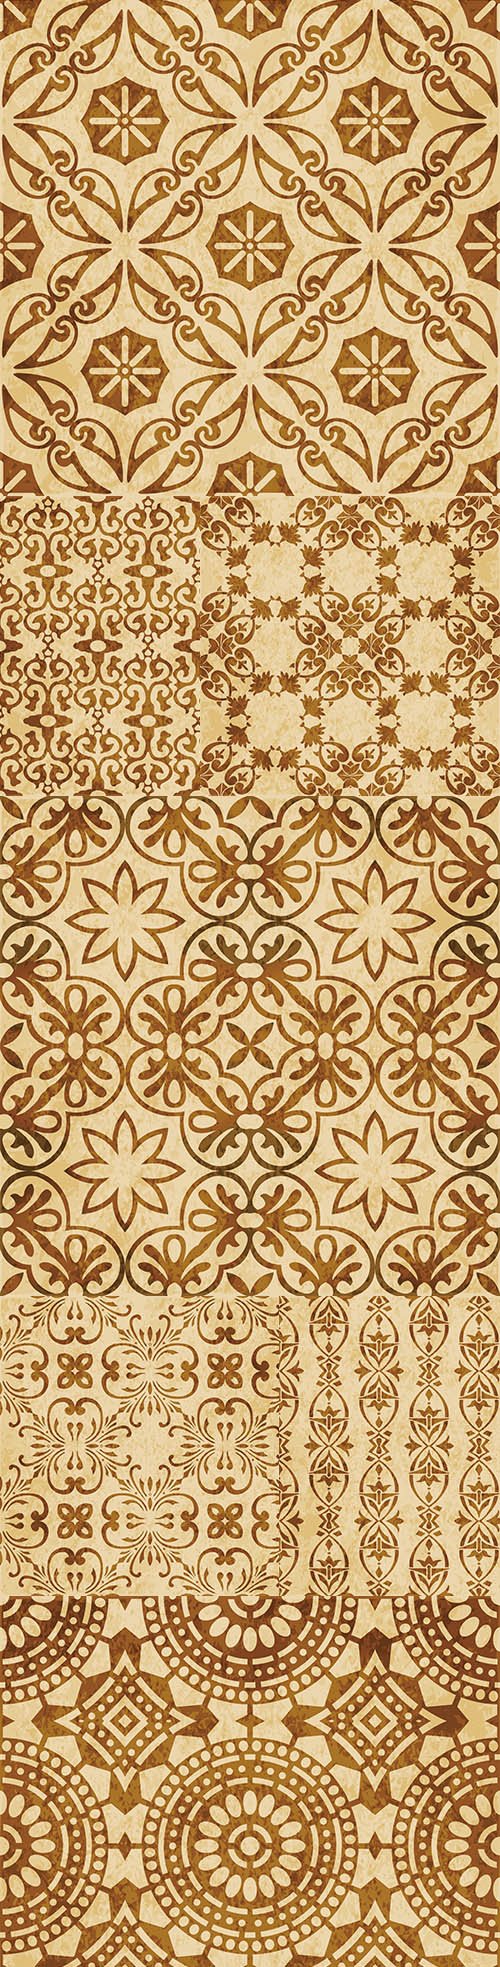 Retro brown textured background decorative elements